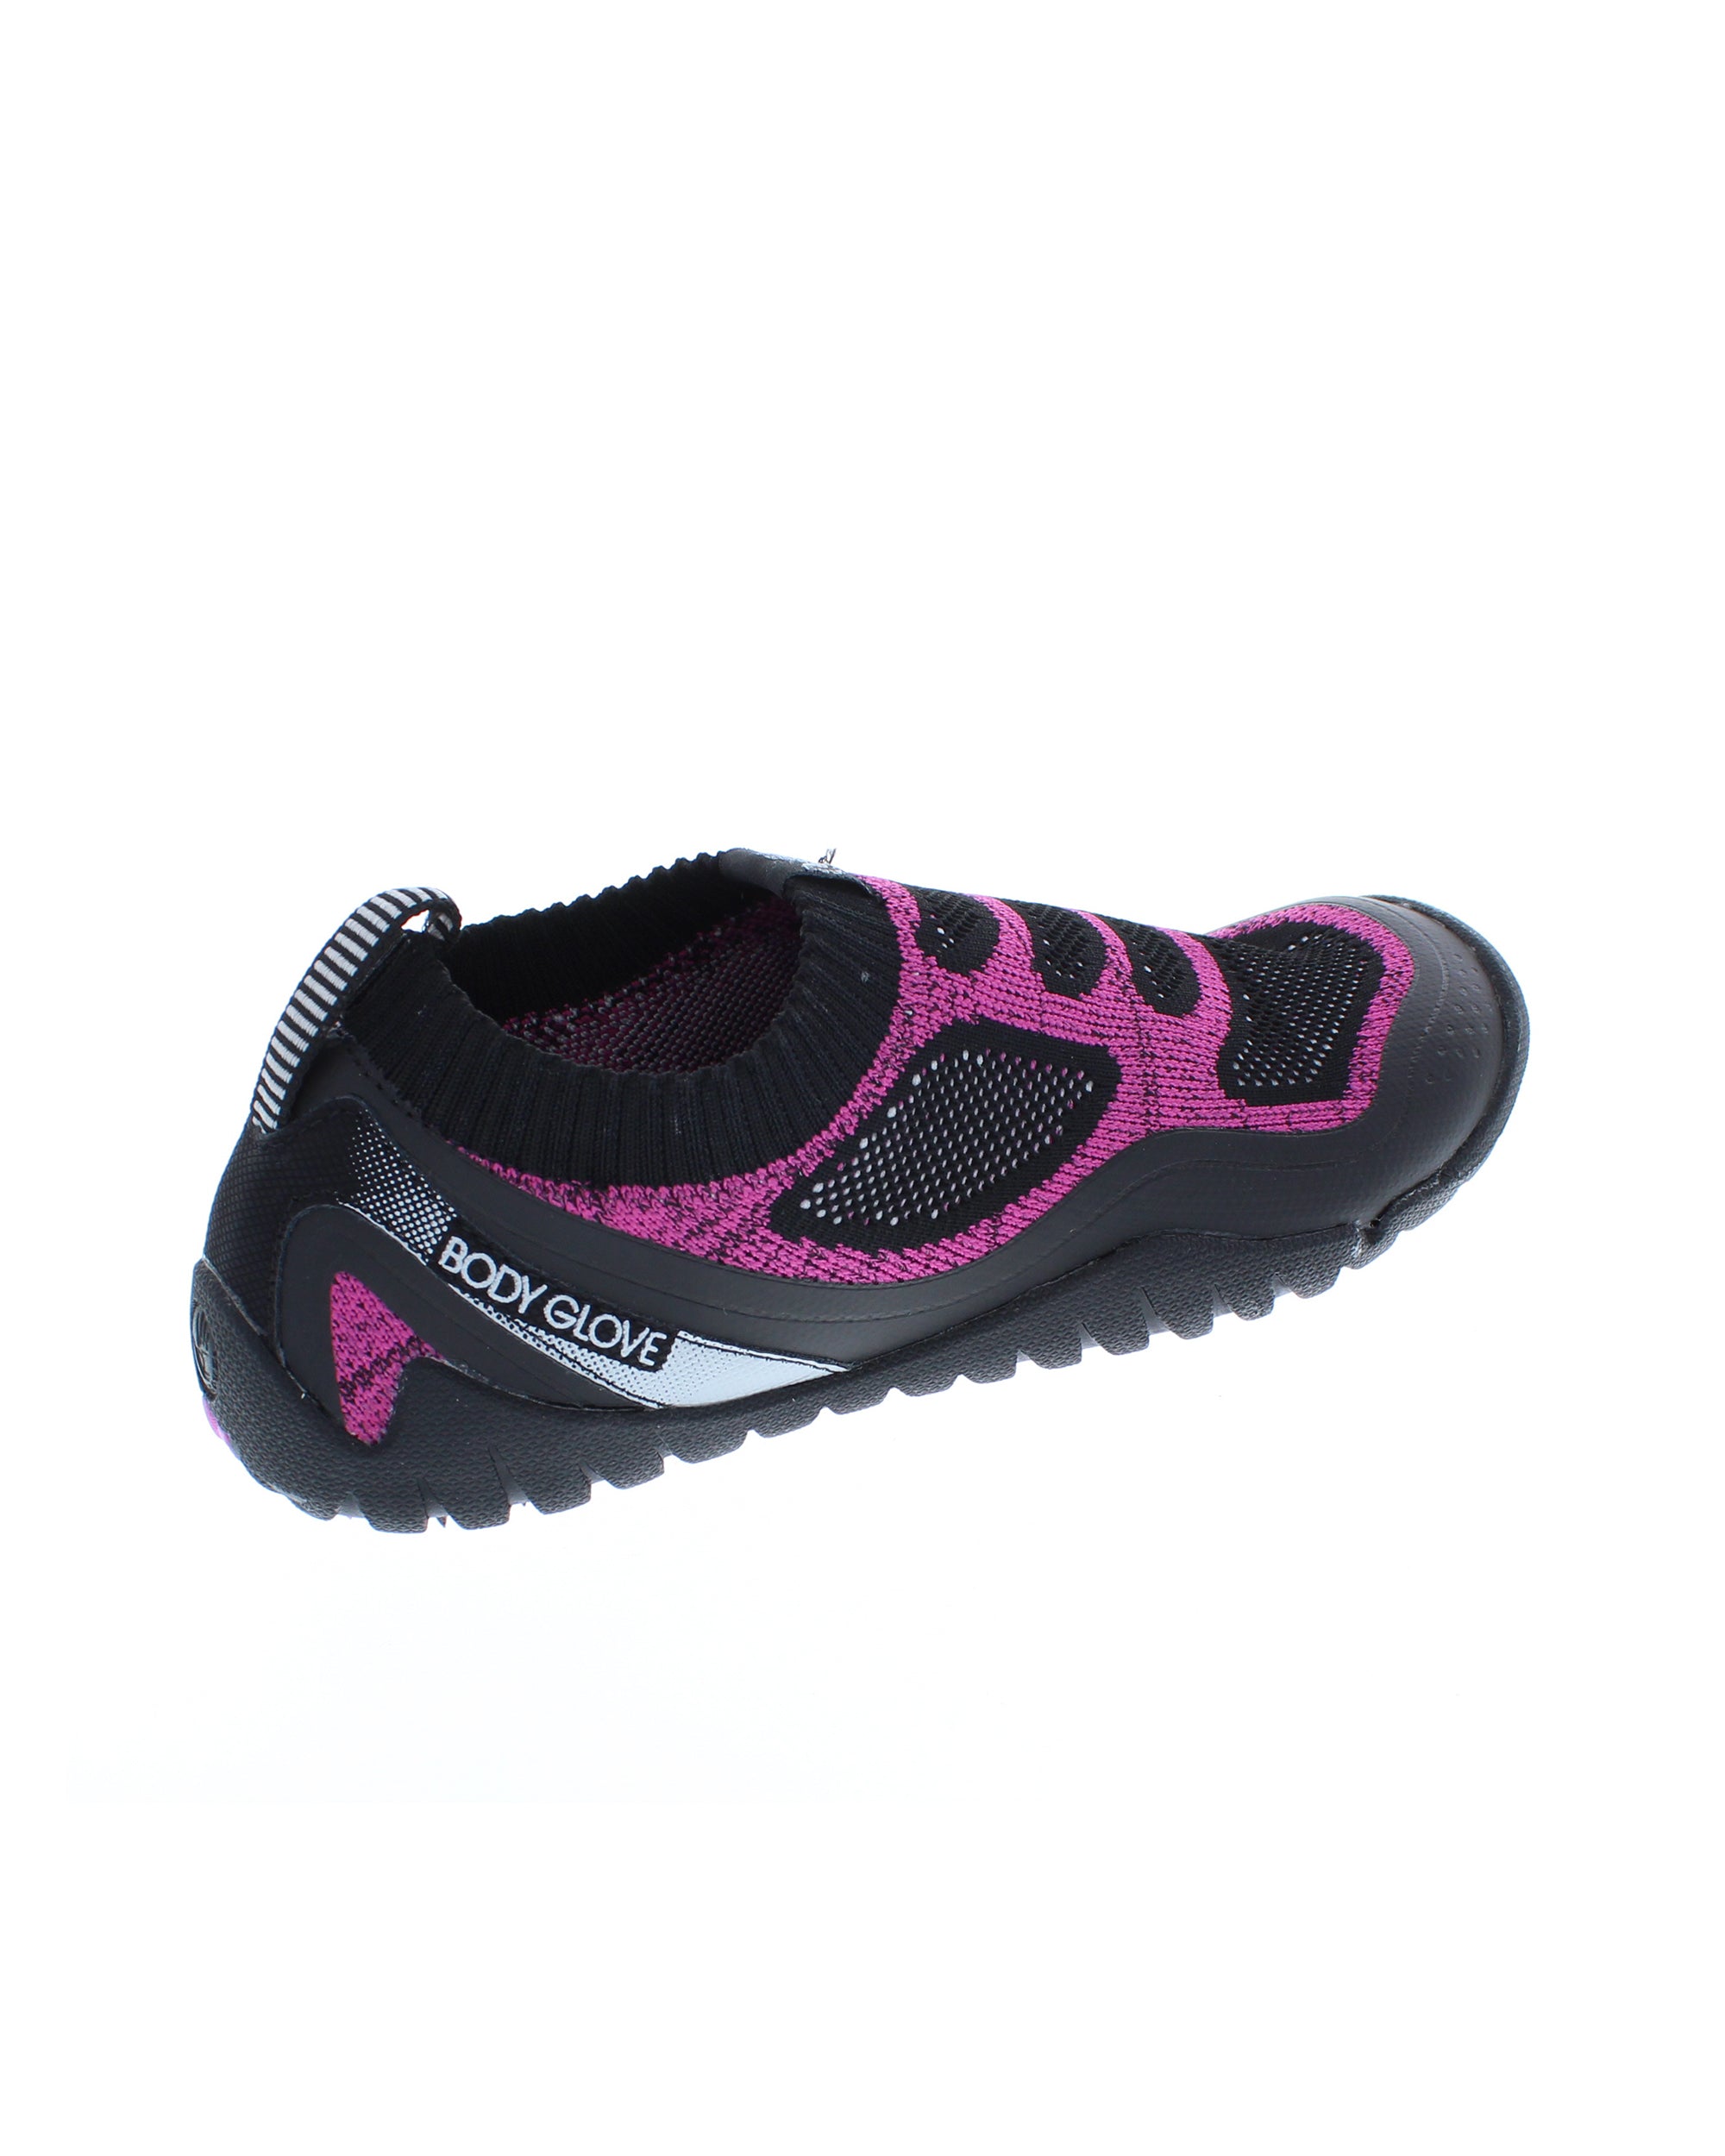 AEON Water Shoes - Black/Oasis Pink 